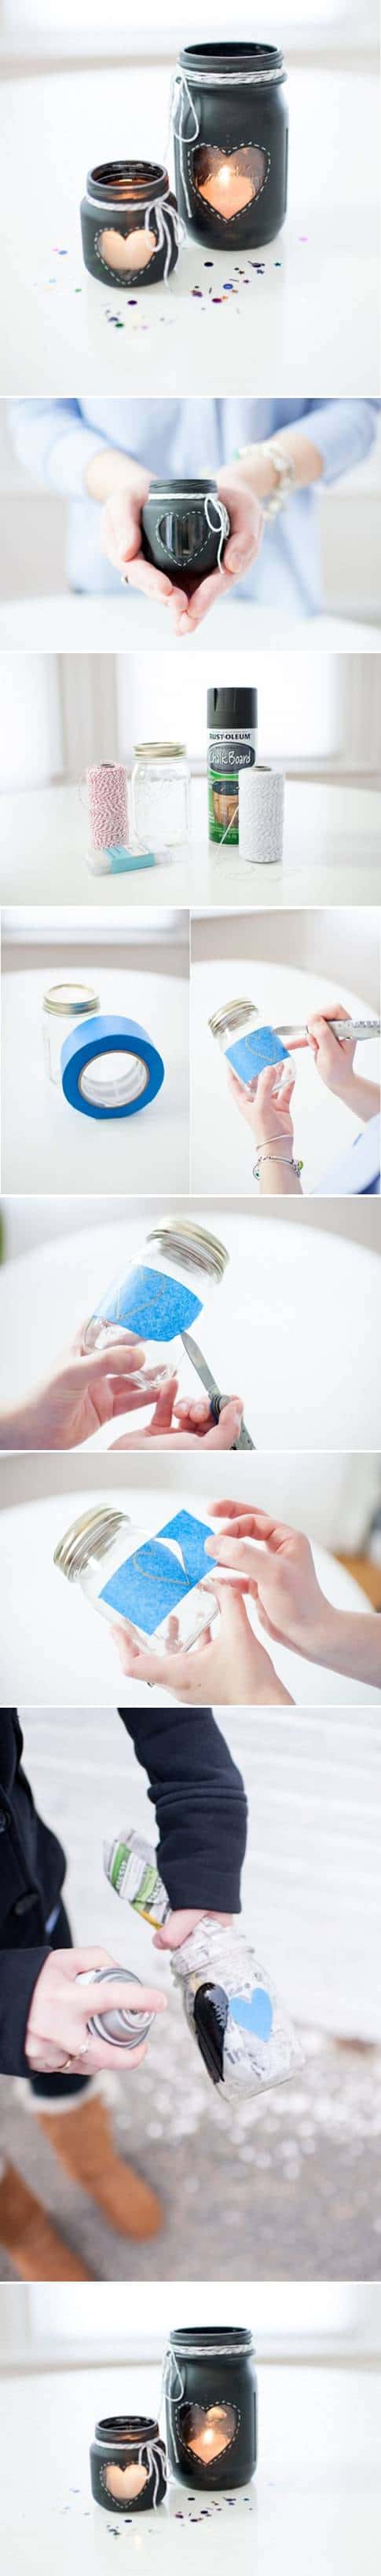 How To Paint Glass homesthetics.net mason jar painting (3)